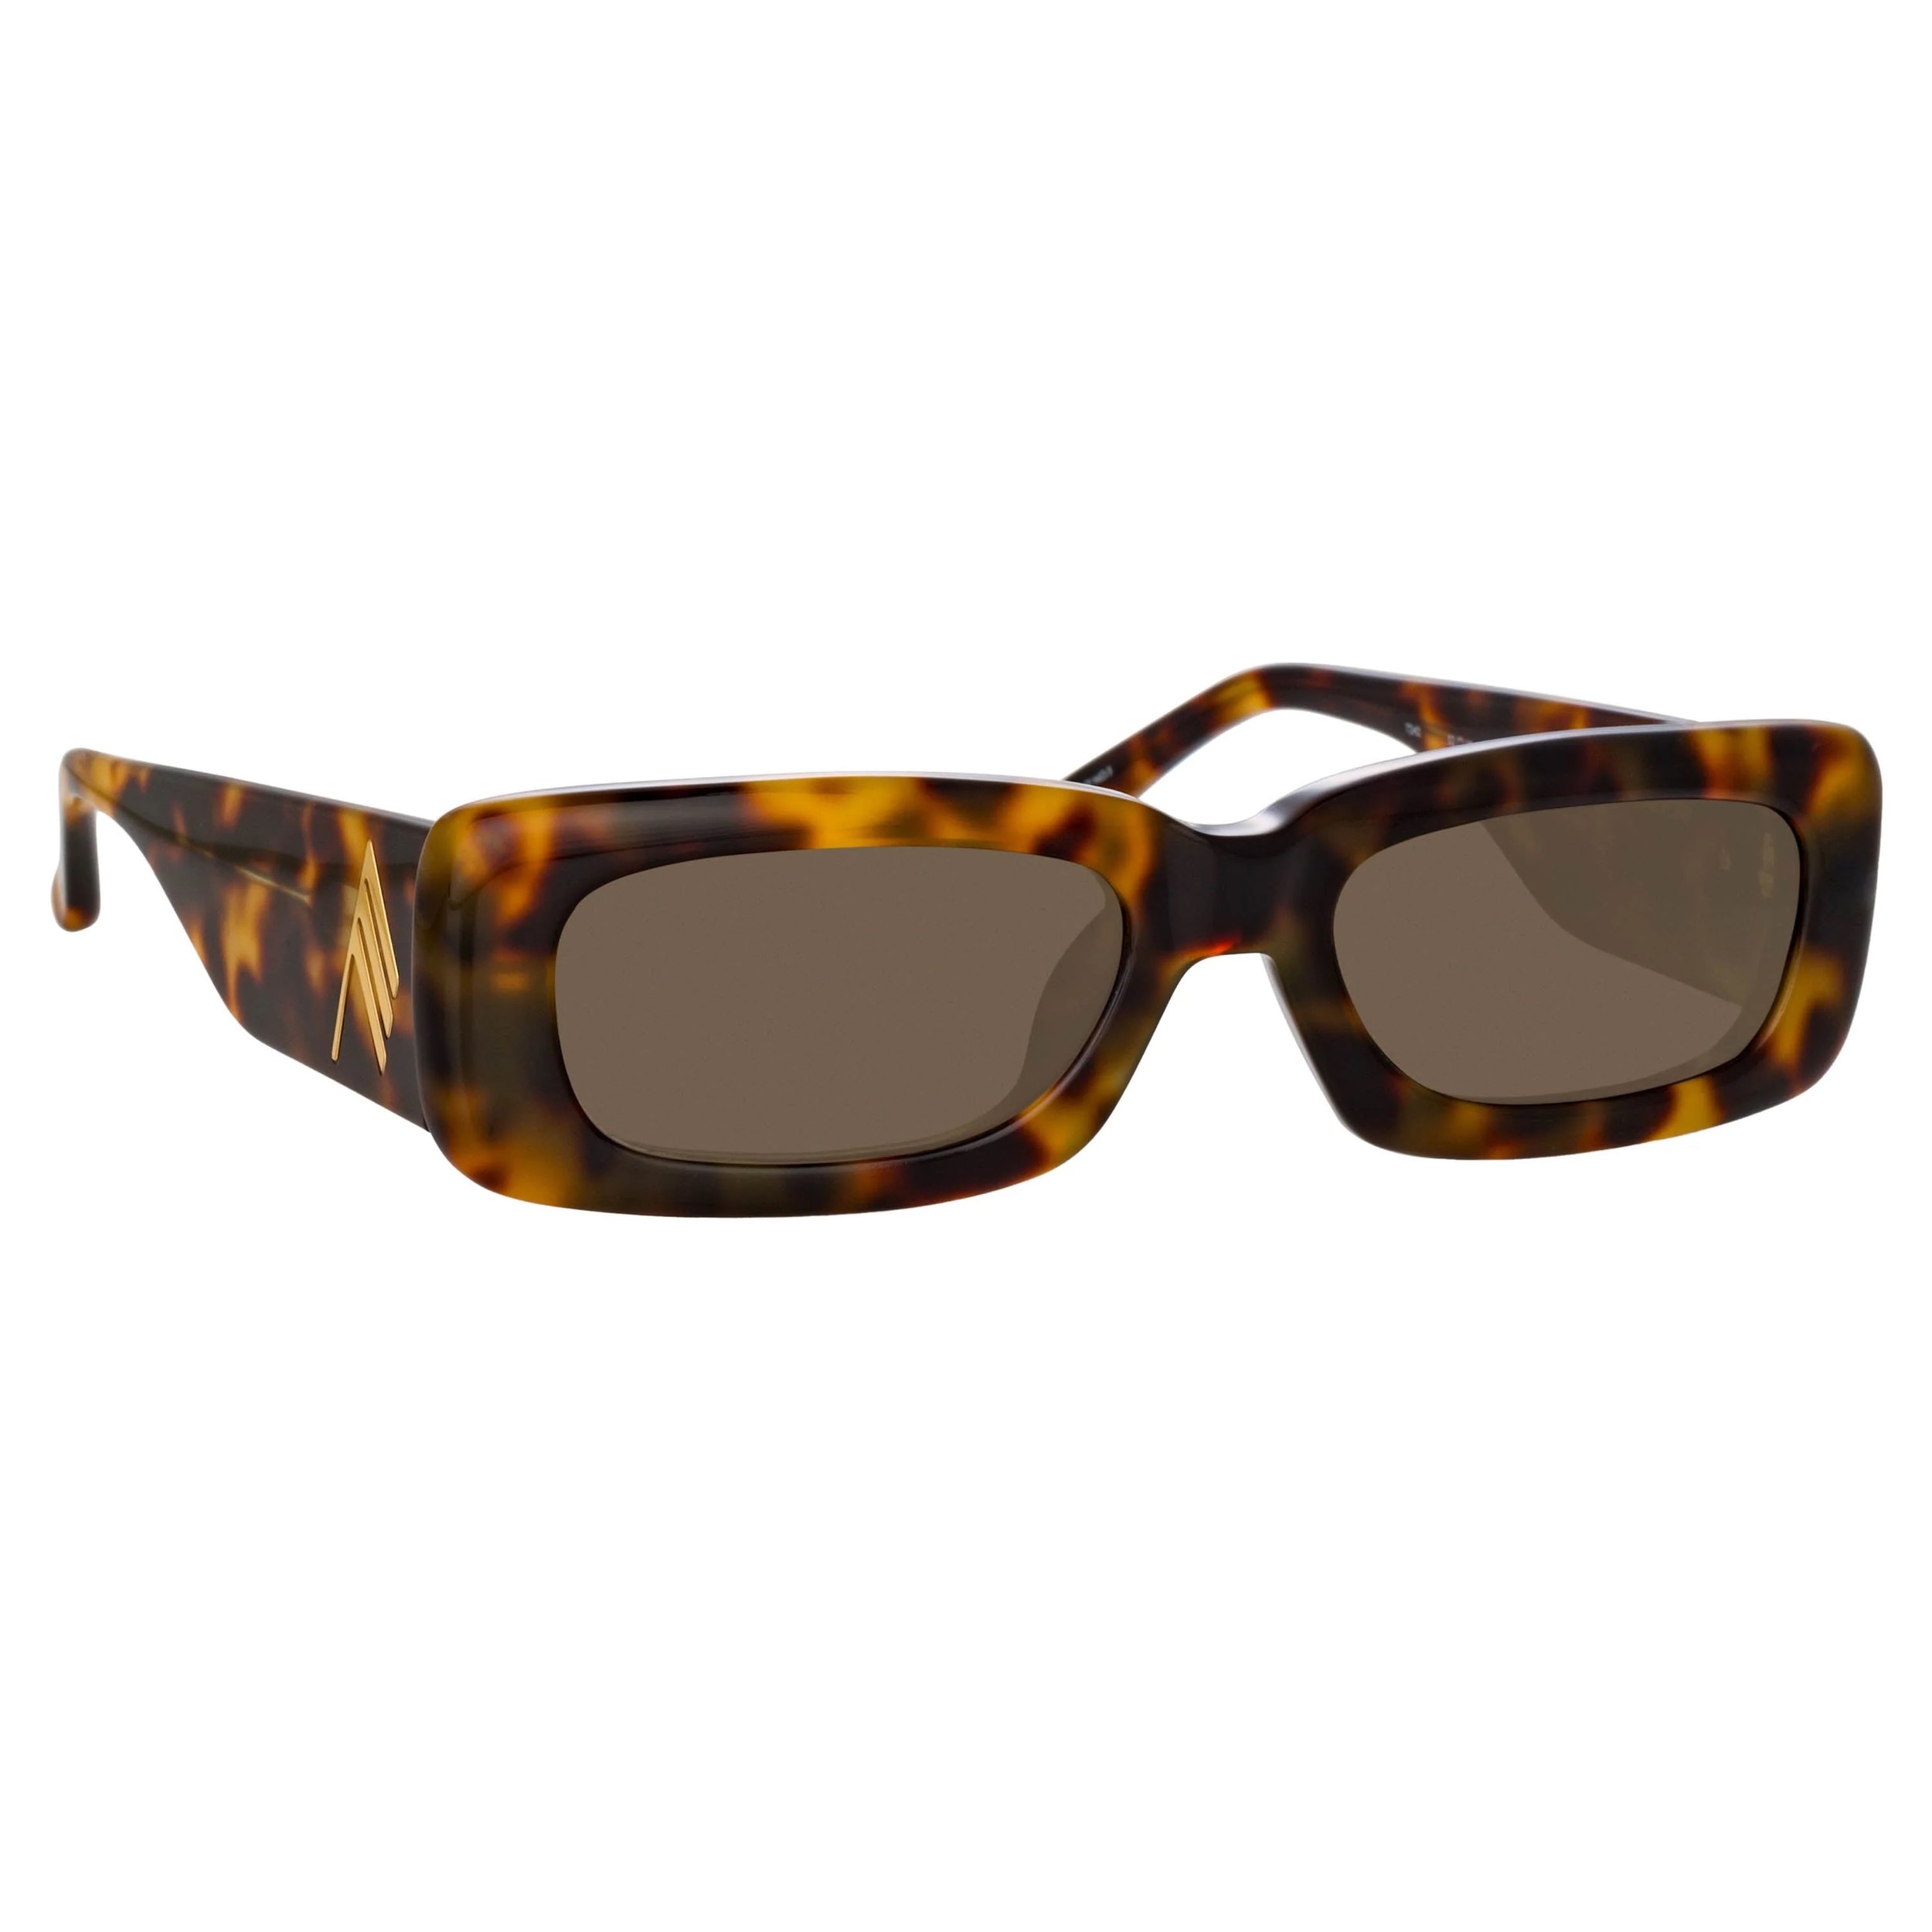 Linda Farrox x The Attico Mini Marfa Sunglasses in Tortoiseshell.jpg